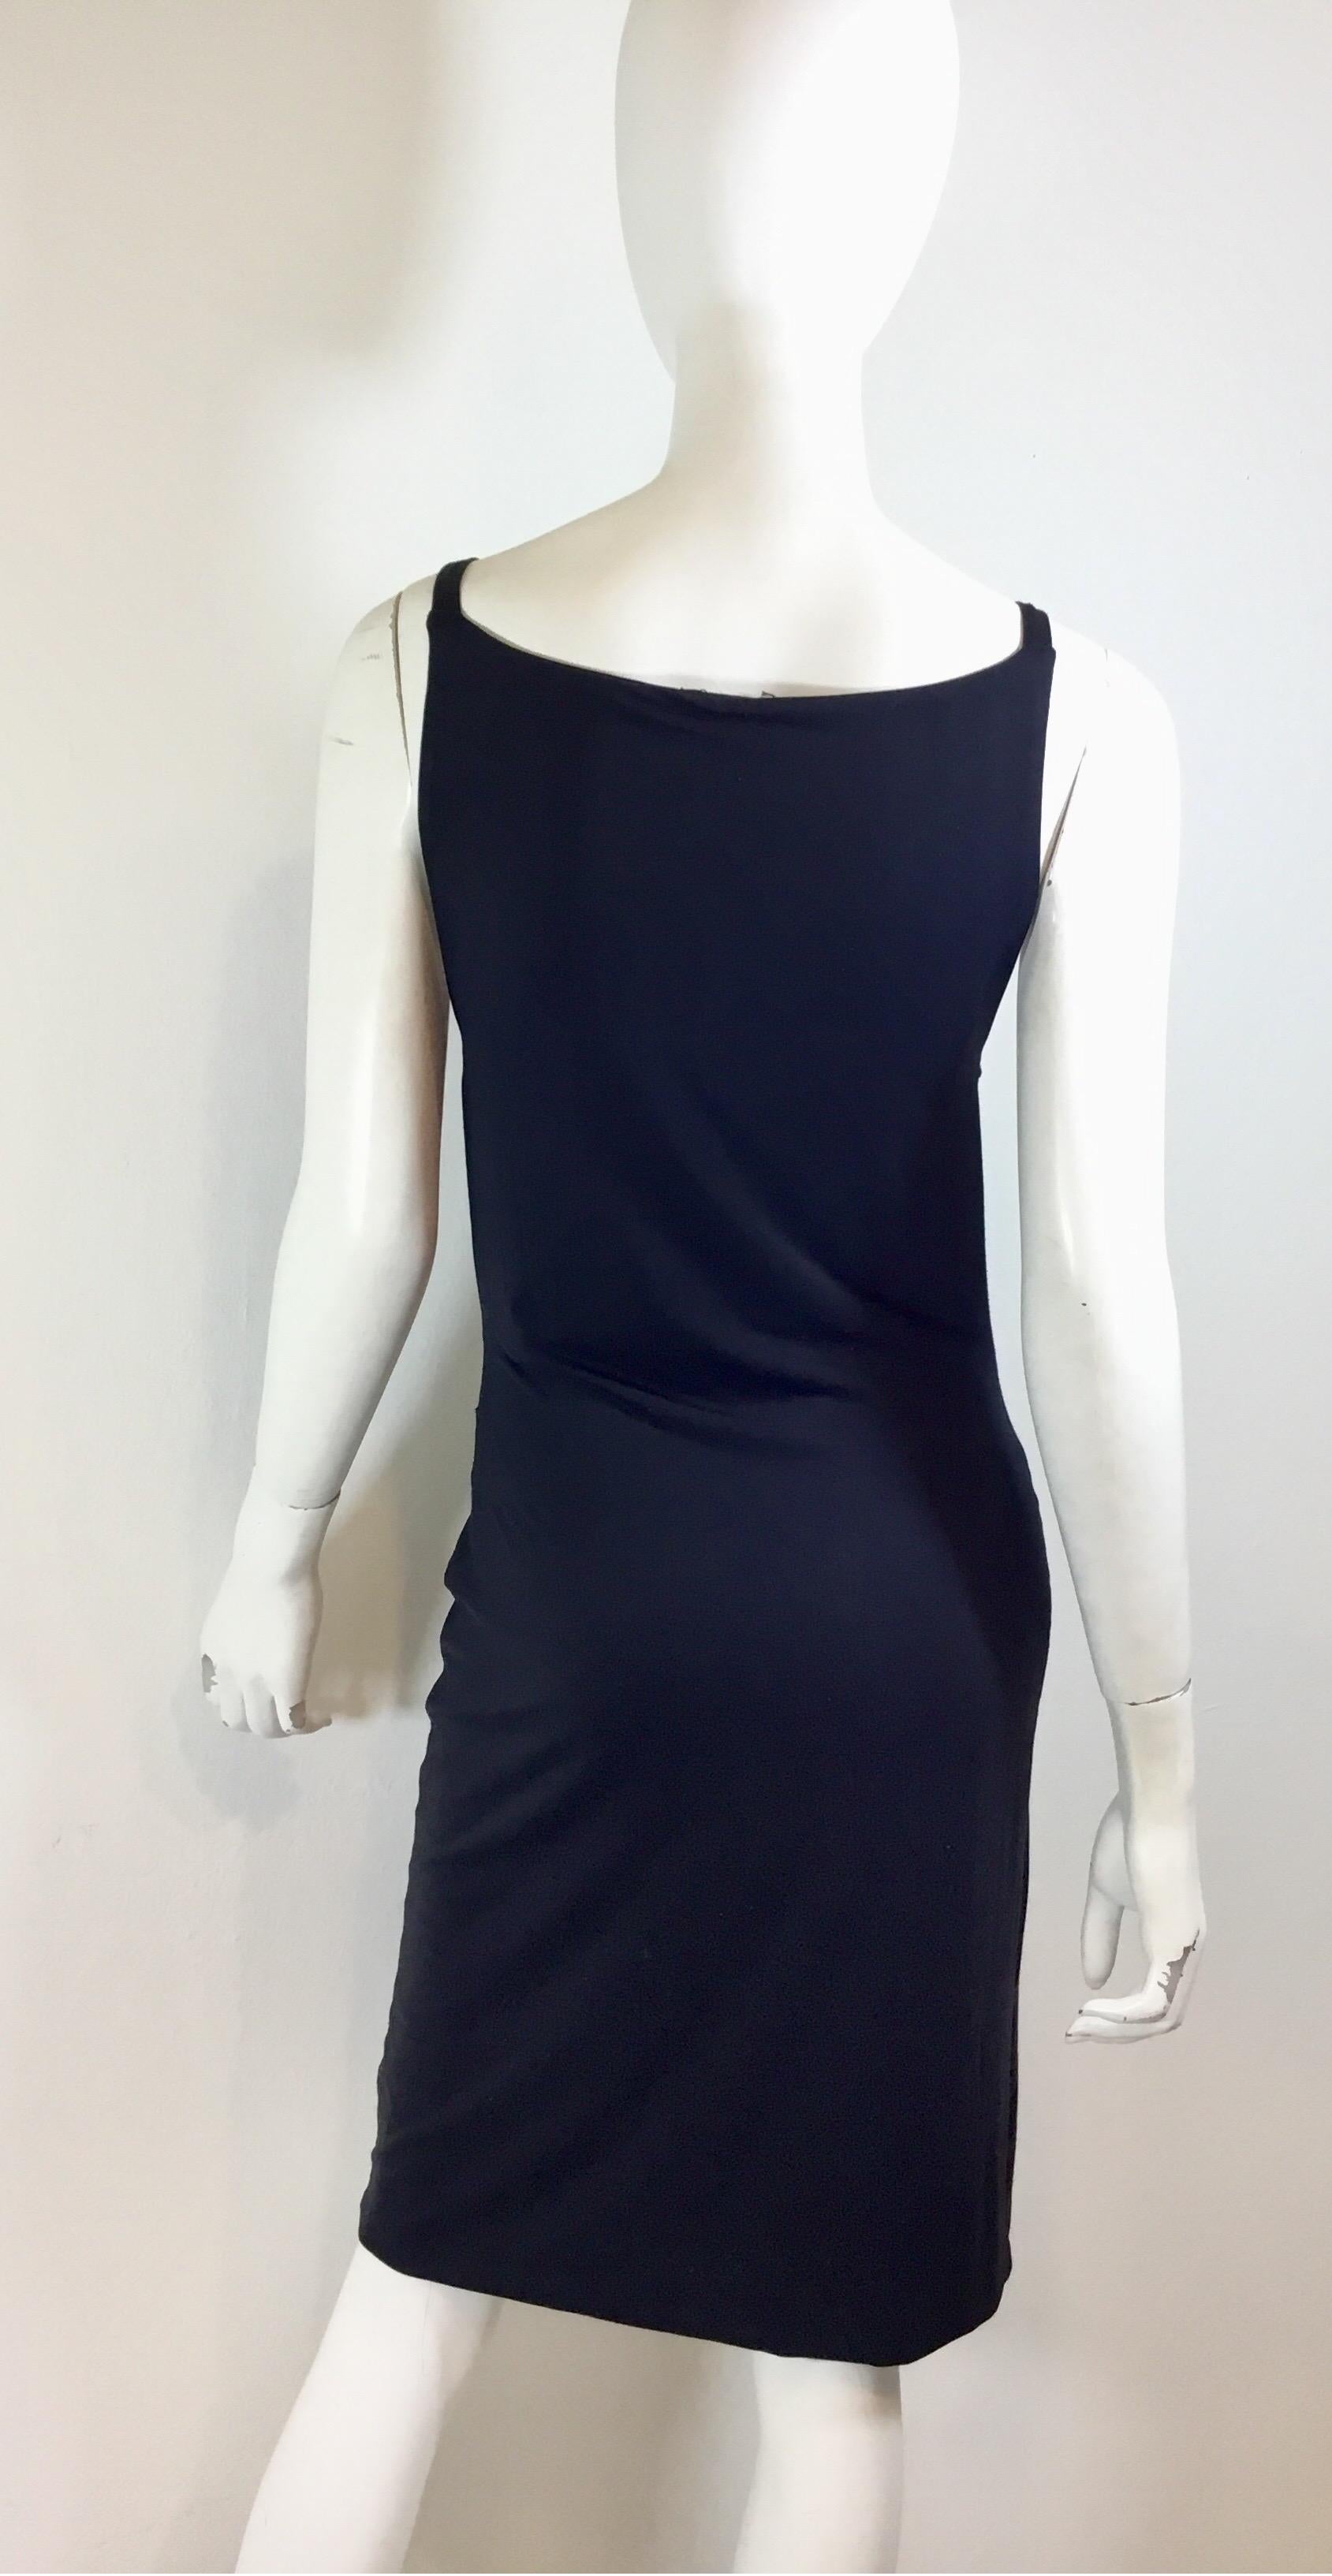 Black Fendi Jersey Dress with Lucite Detail Cutout Bodice